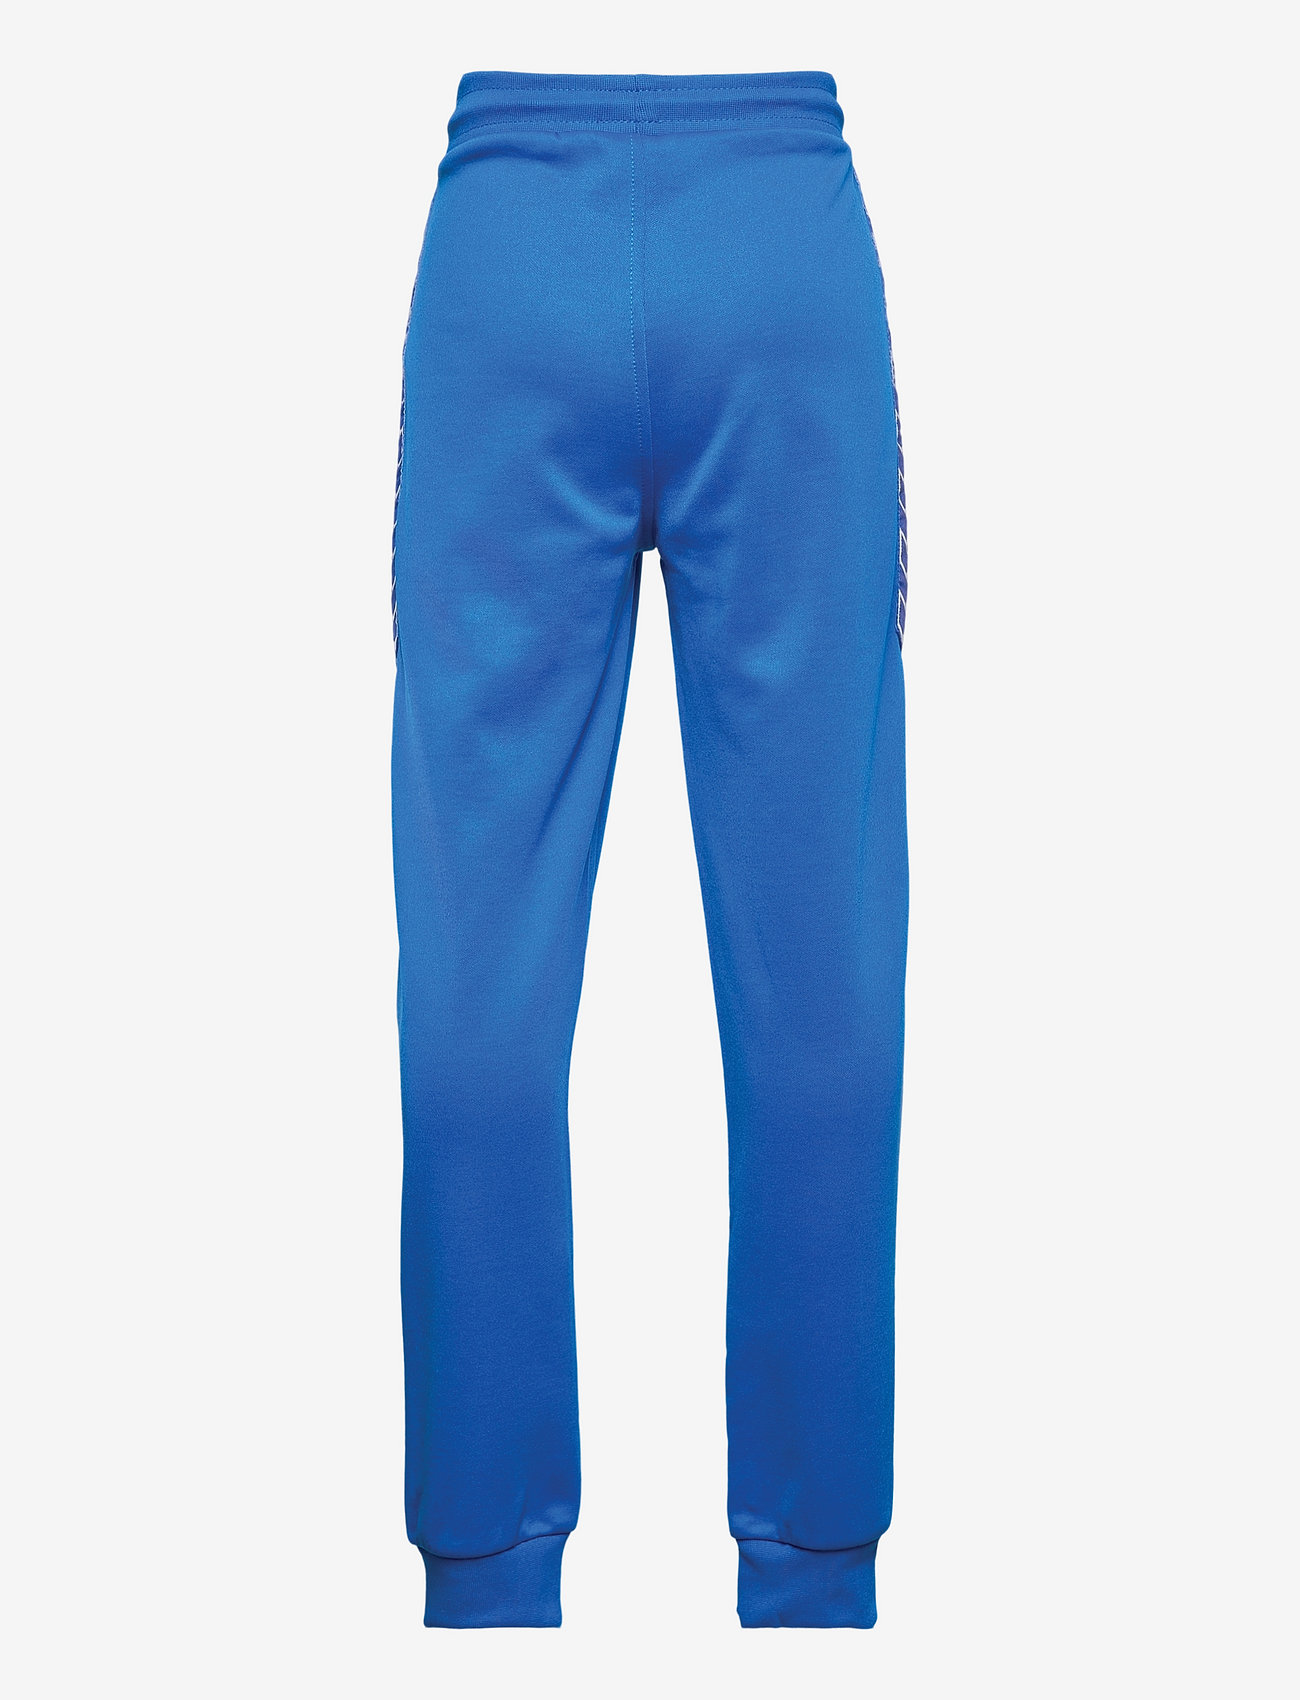 Hummel - hmlTRICK PANTS - sports bottoms - lapis blue - 1